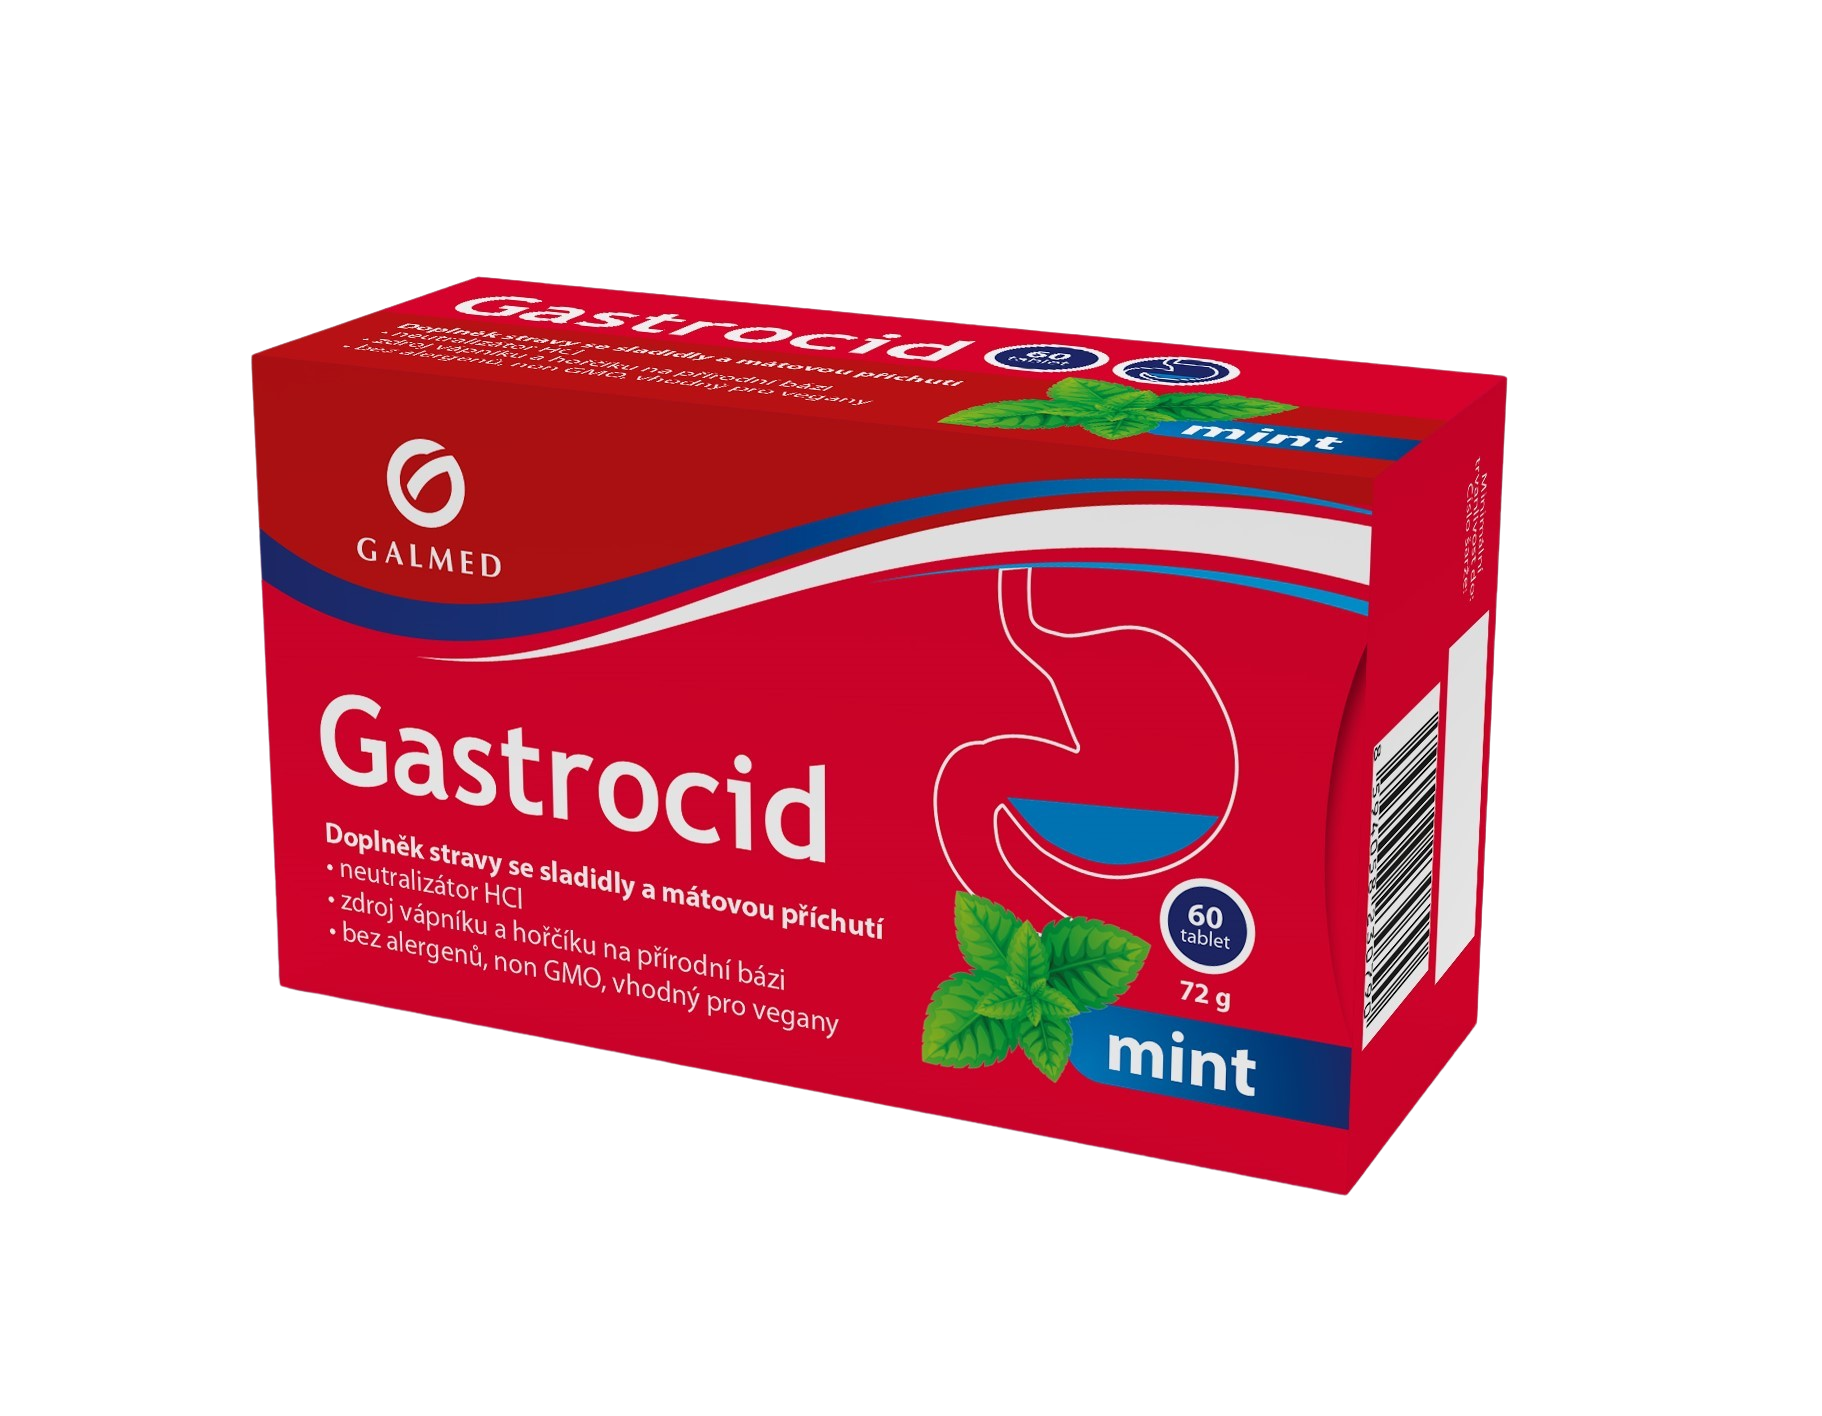 Gastrocid Mint Tbl.60 Galmed